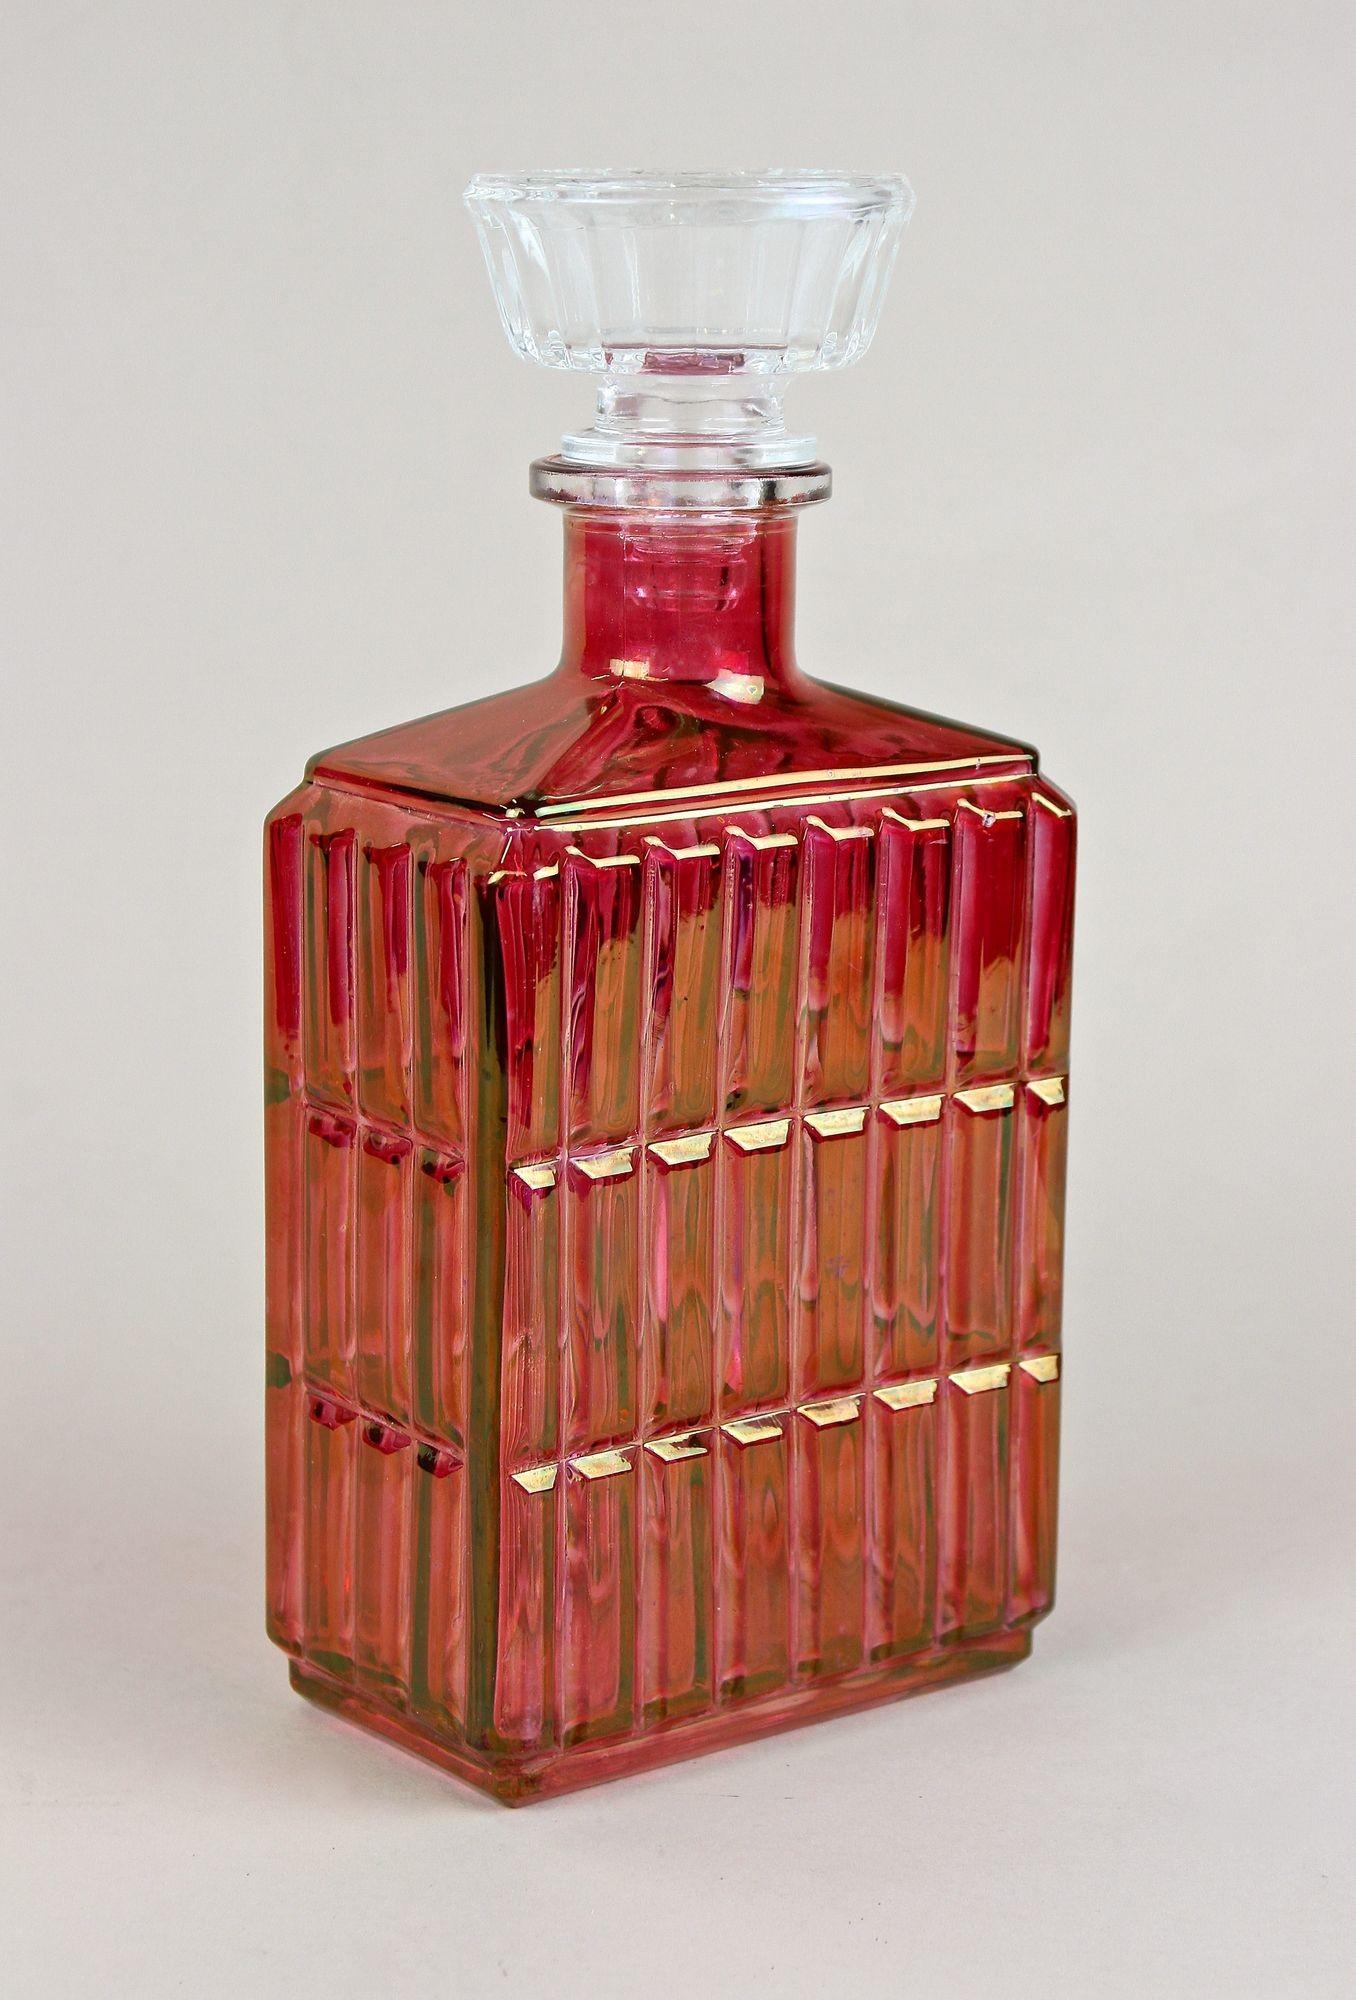 20th Century Art Deco Glass Decanter or Liquor Bottle, Austria ca. 1930 For Sale 12